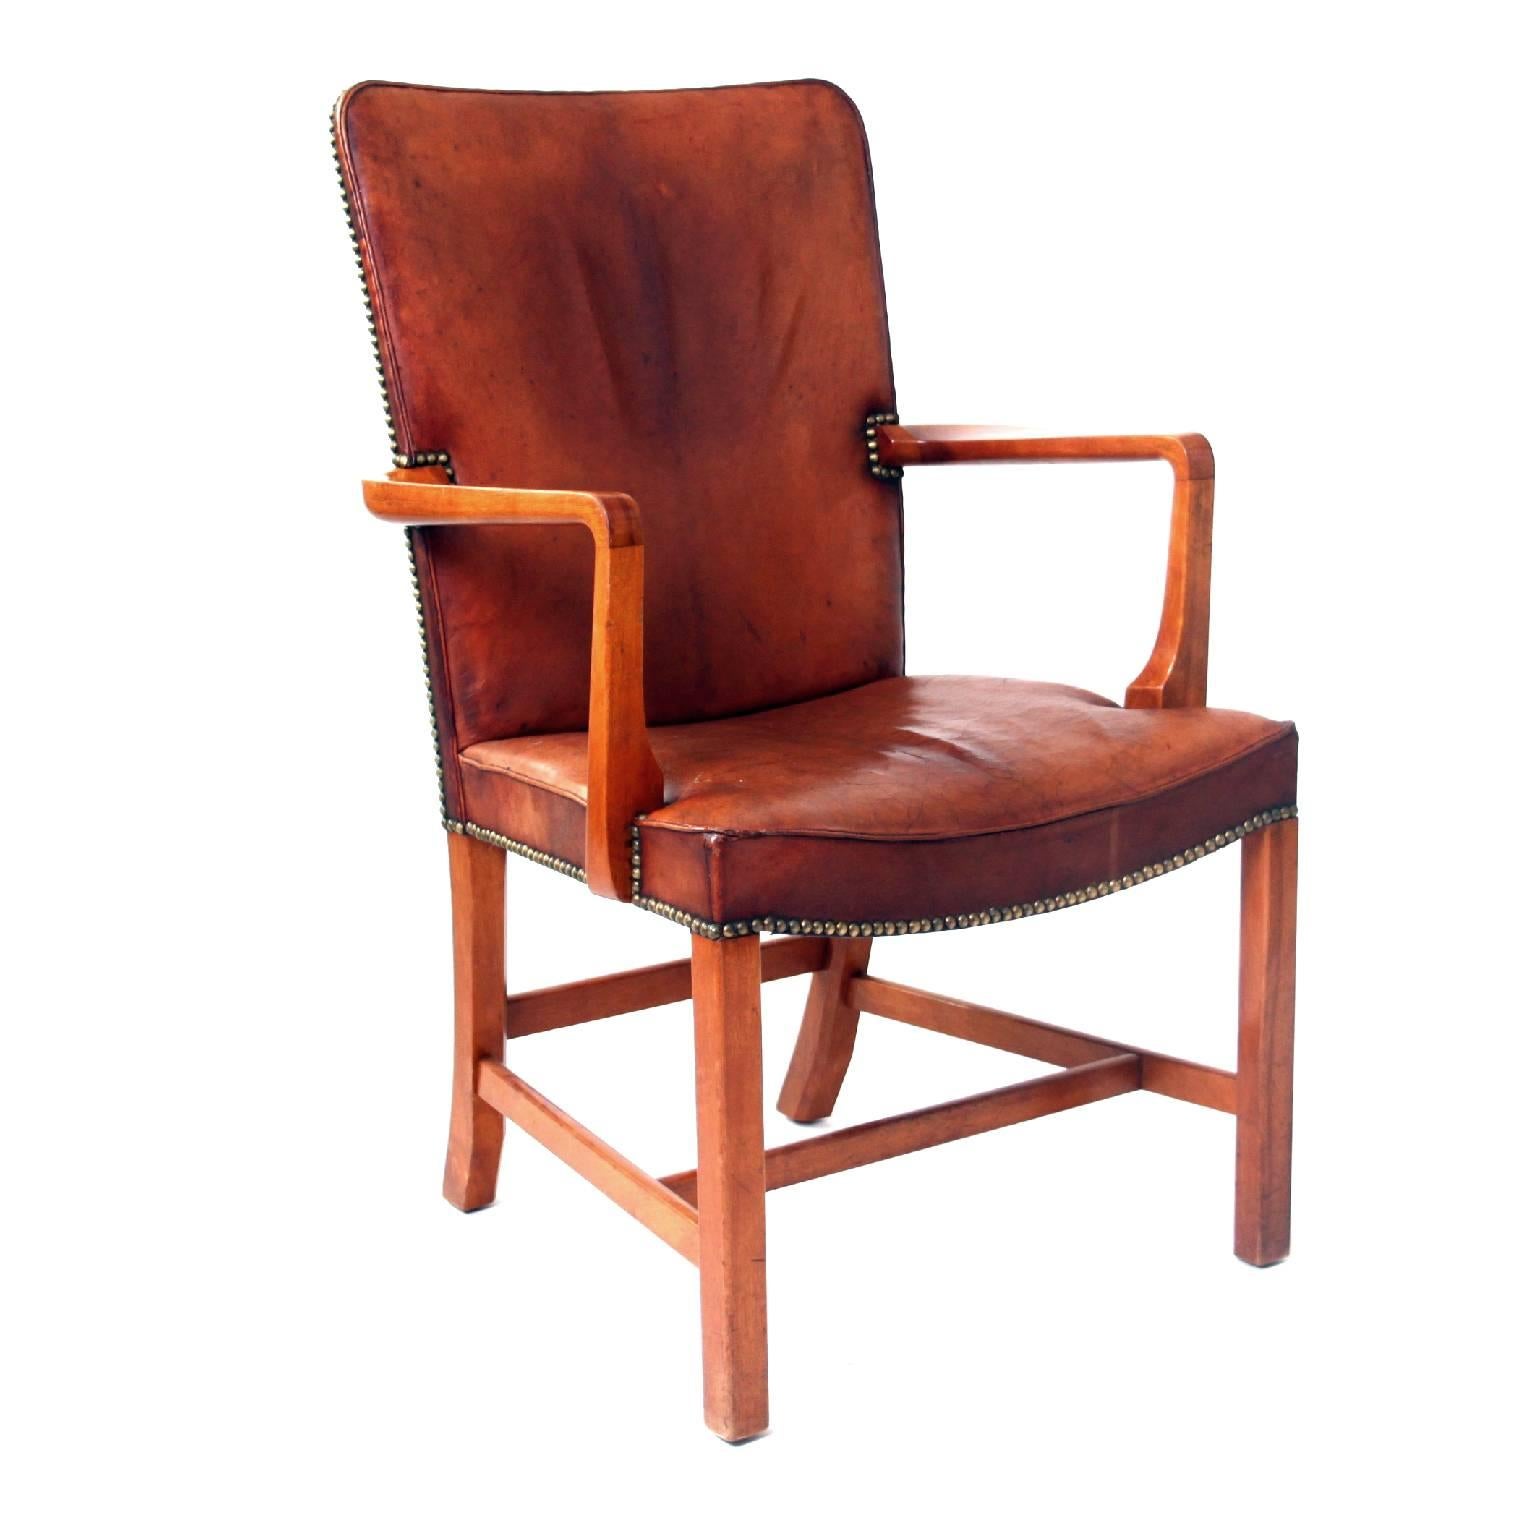 Danish Kaare Klint, High Back Armchair in Original Niger Leather, 1940's. 